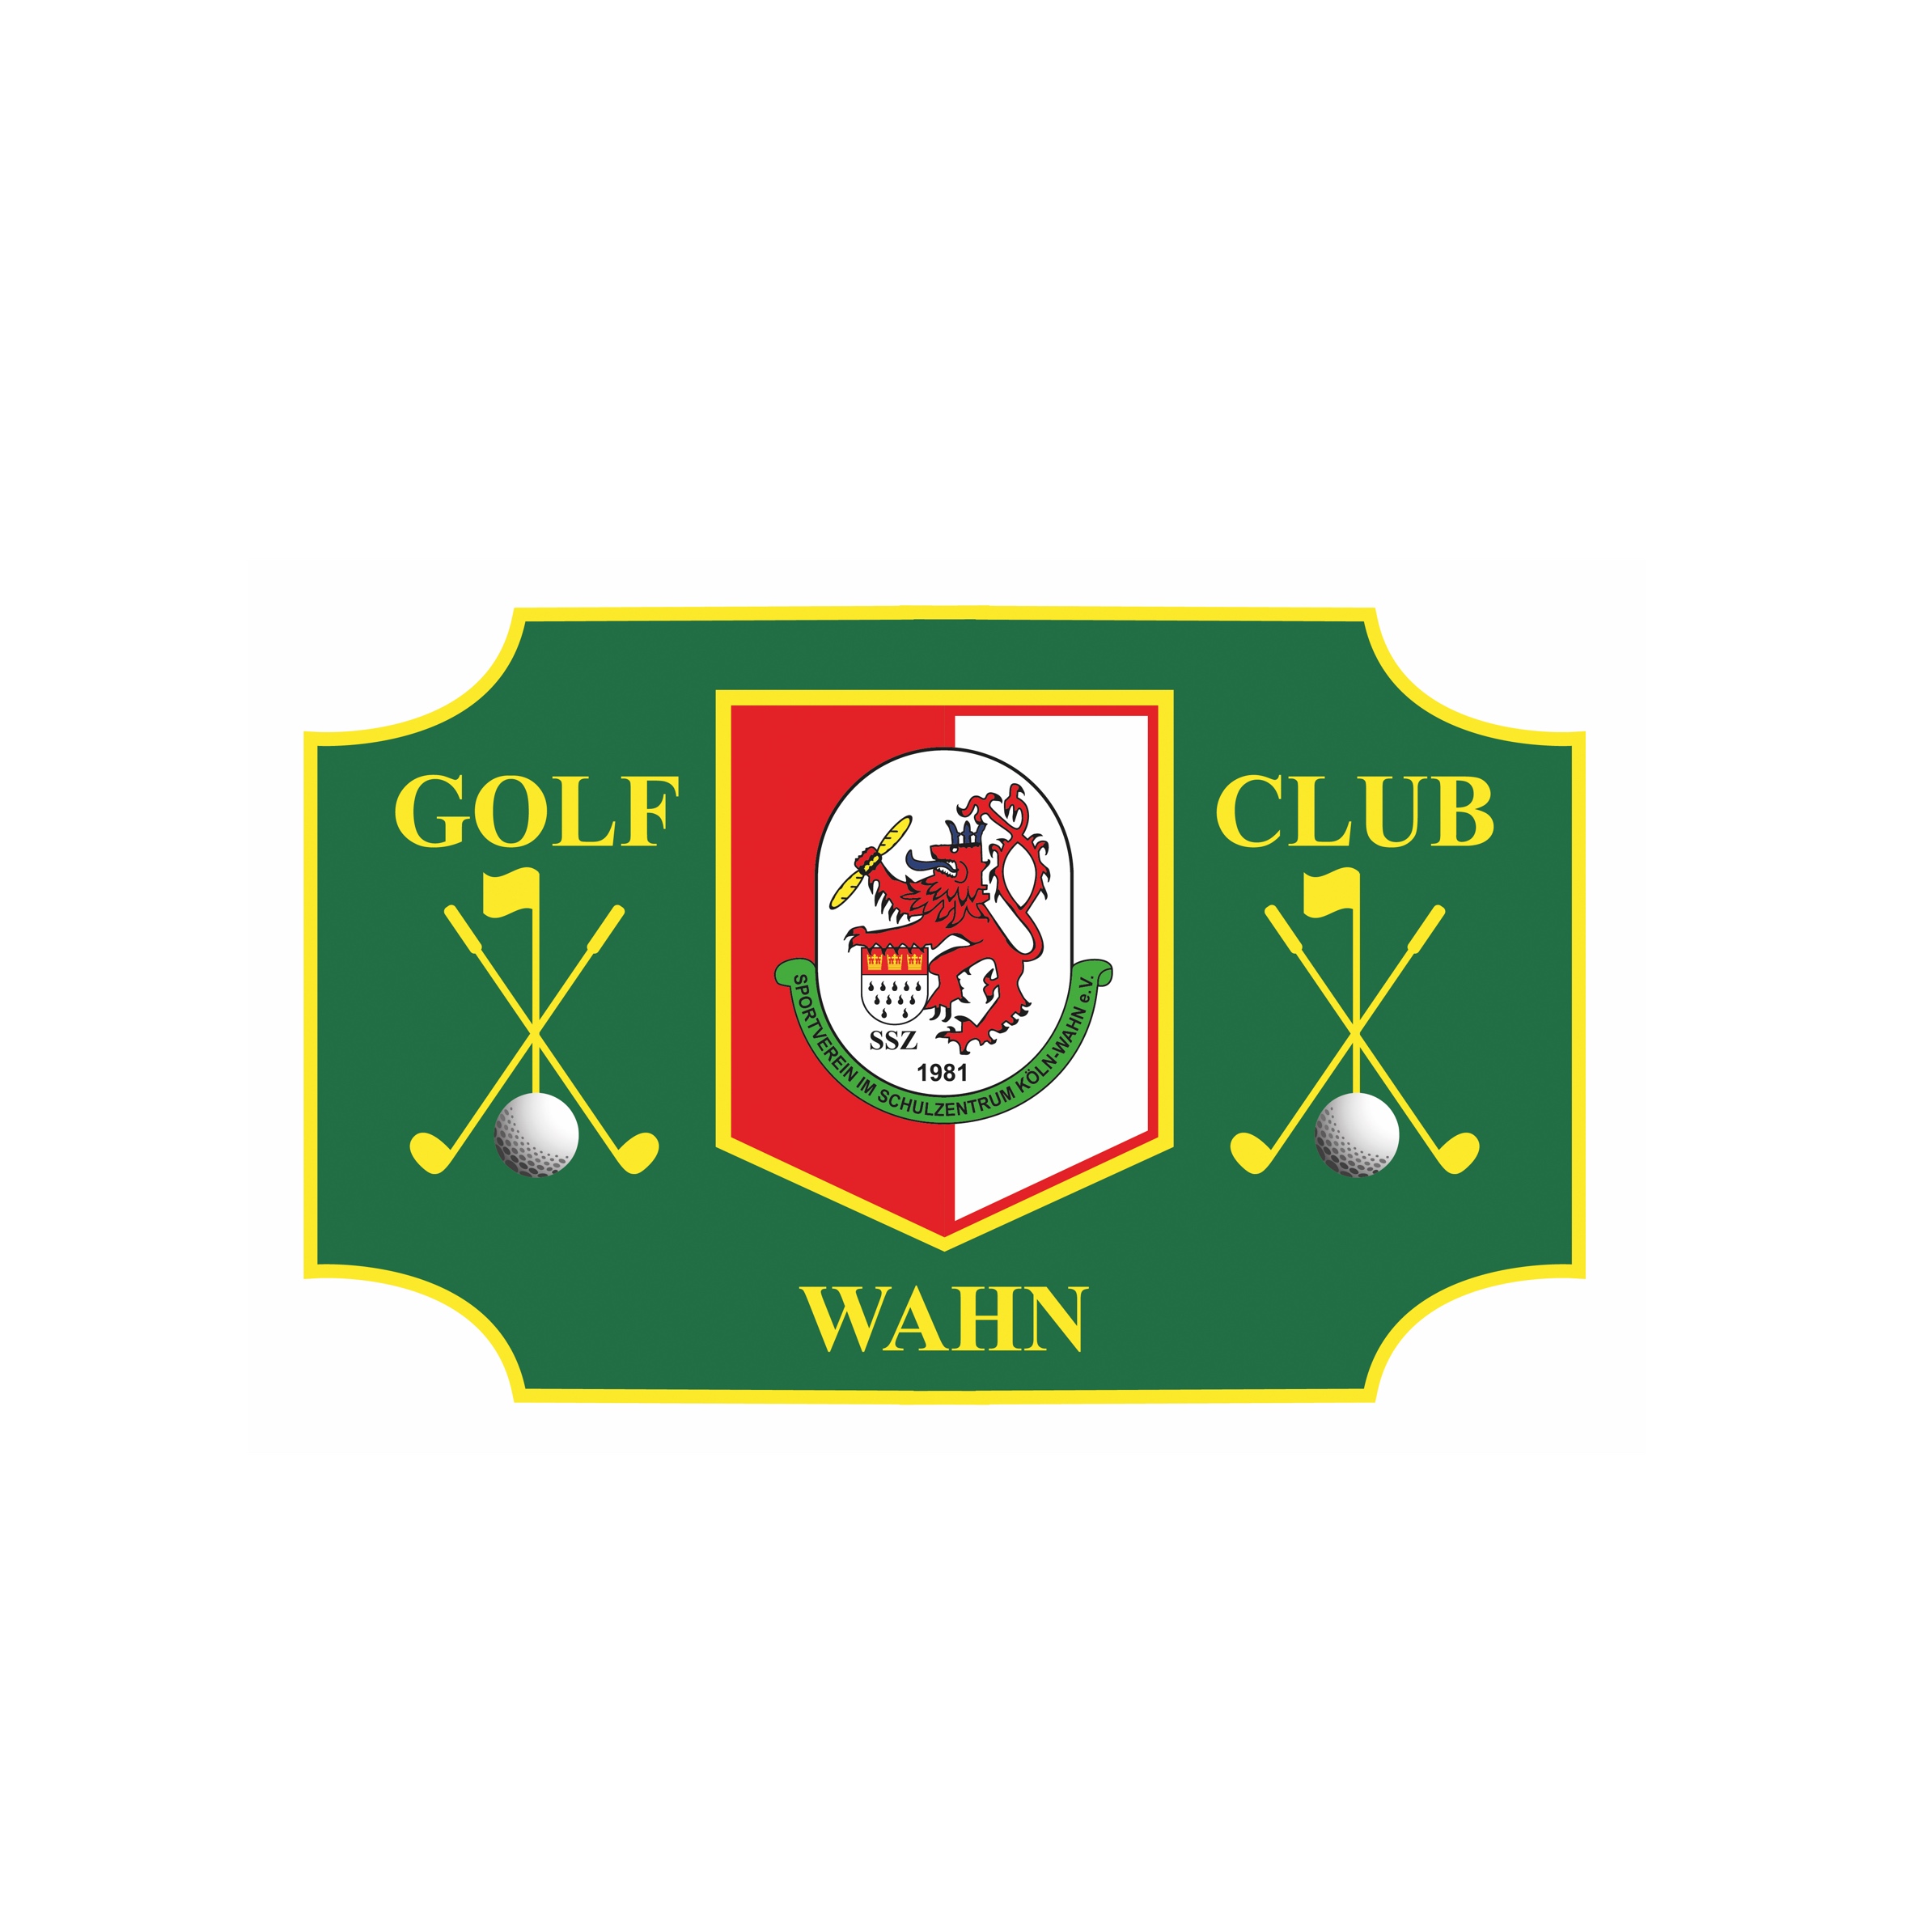 60. SSZ Wahn (Golfclub im SSZ Wahn e.V.) 9-Loch-Platz